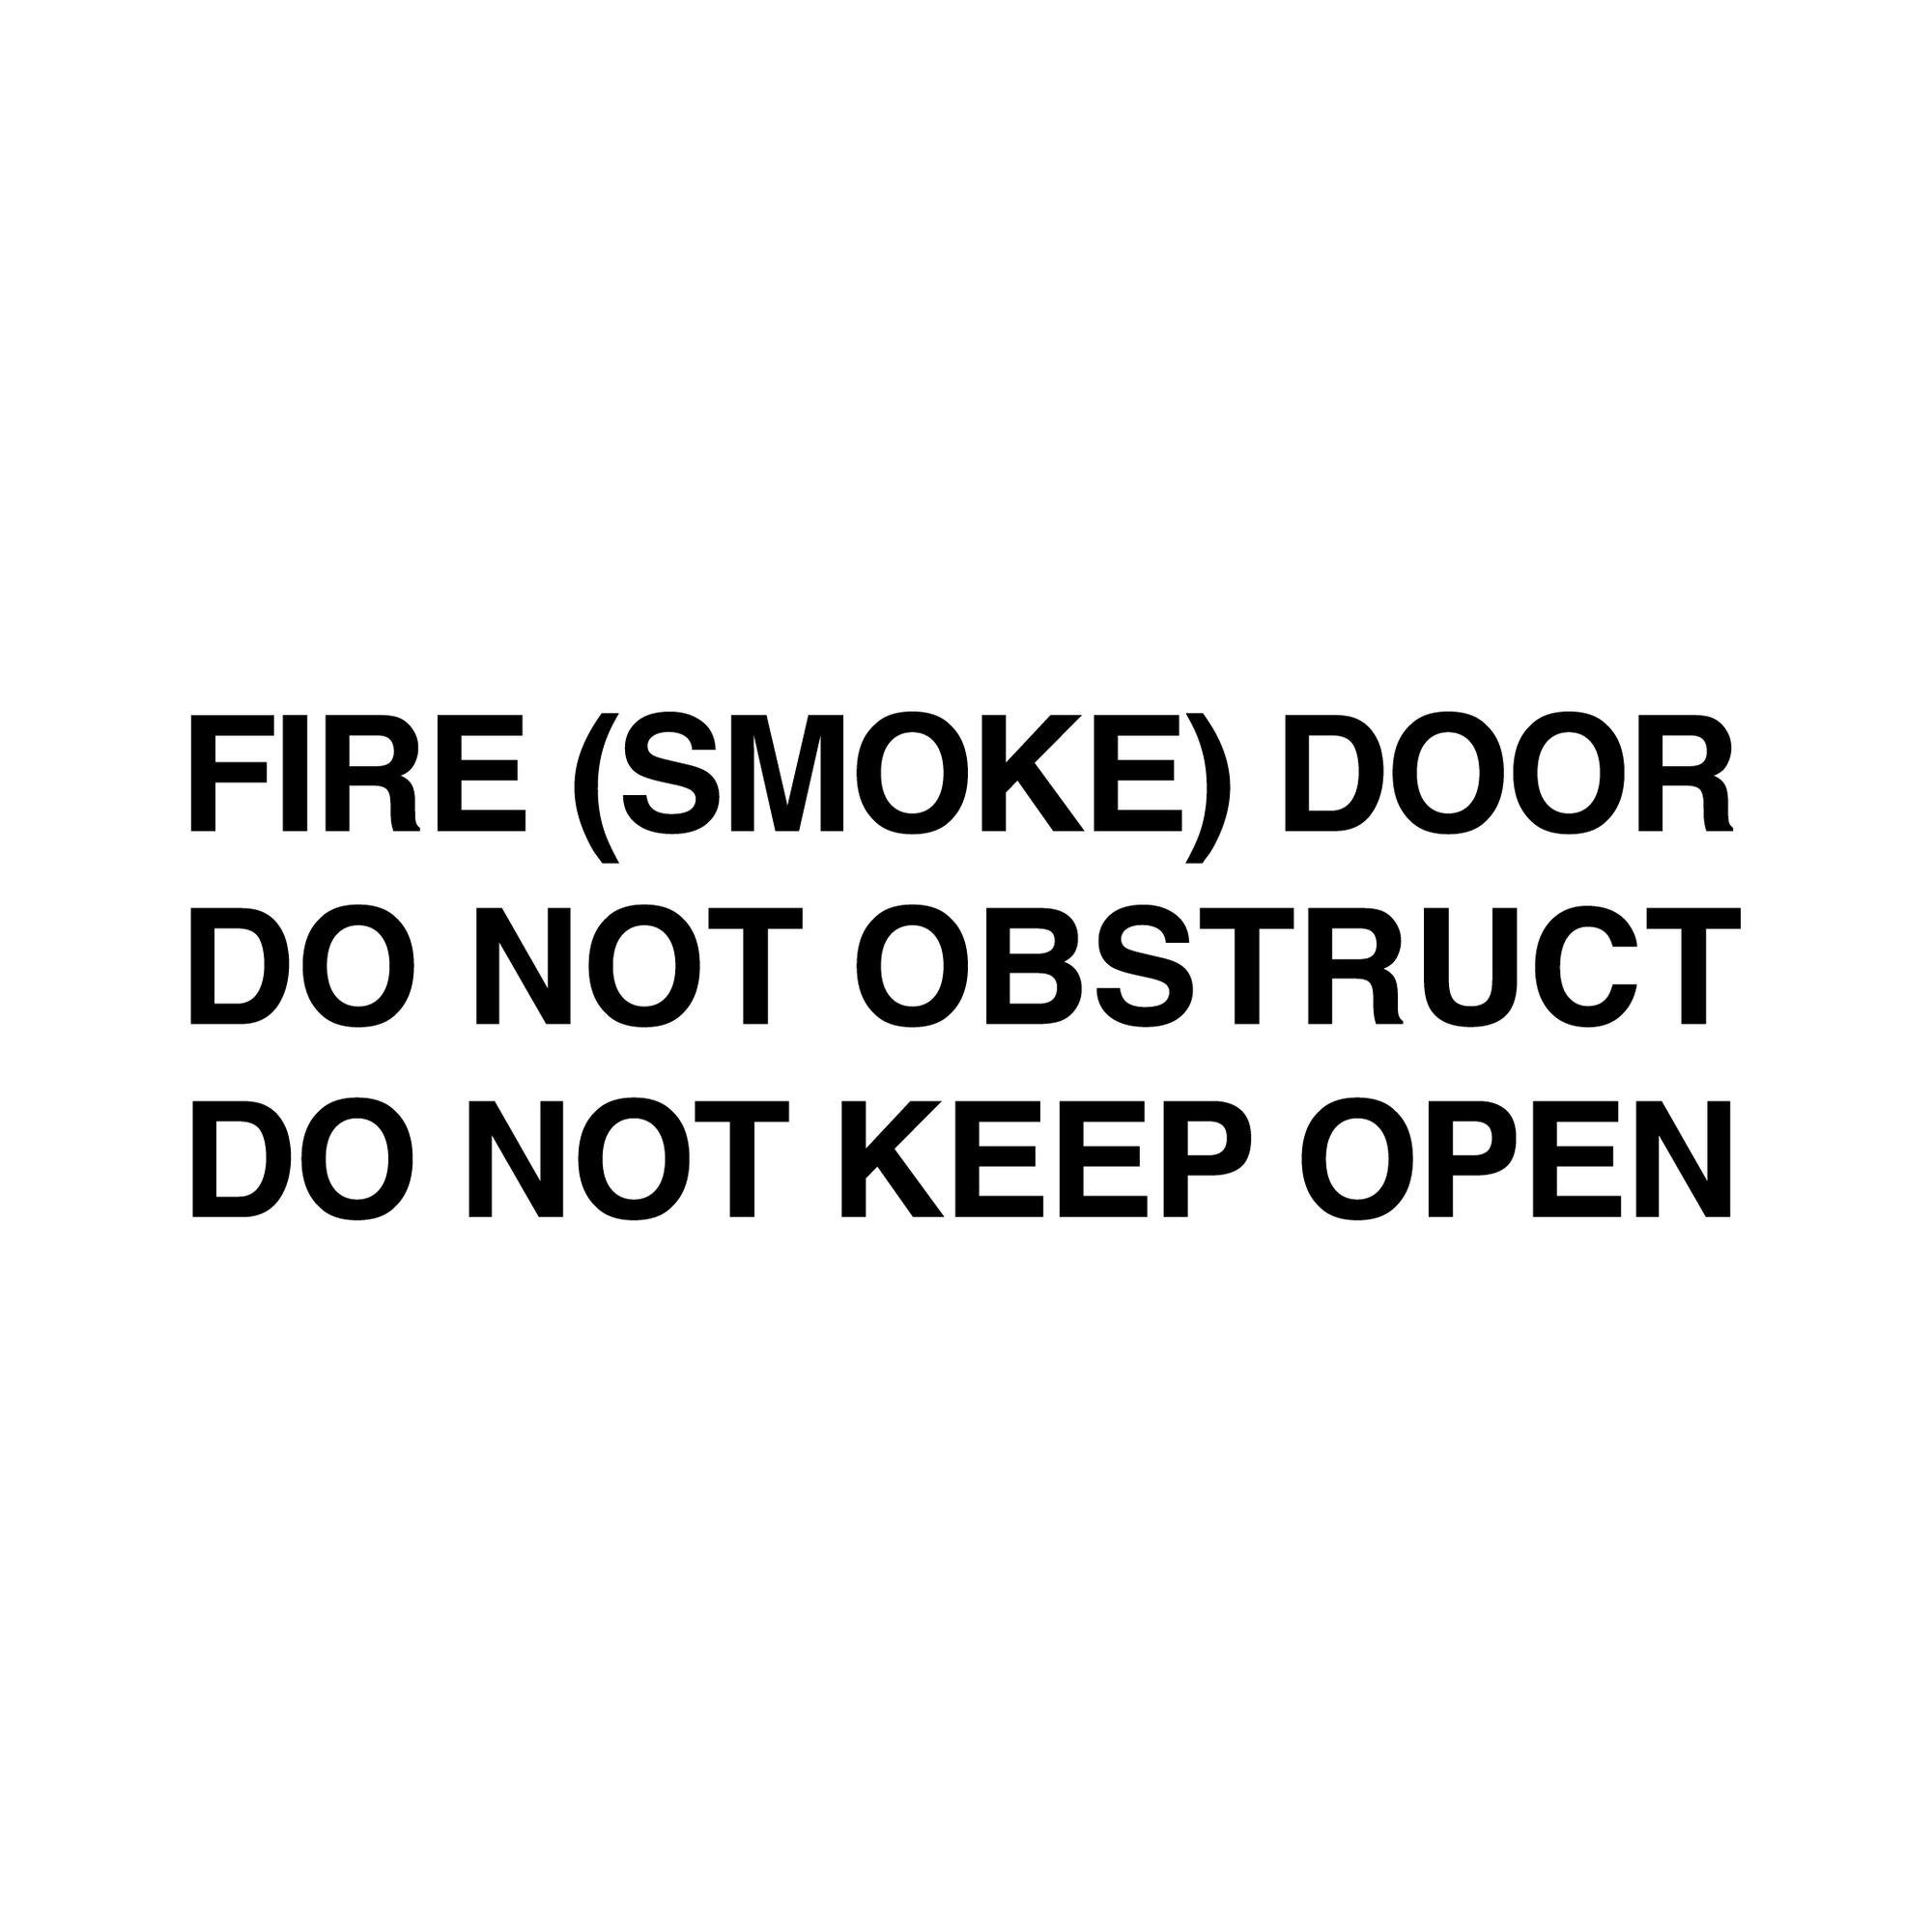 Fire Door Stickers - FIRE (SMOKE) DOOR, DO NOT OBSTUCT, DO NOT KEEP OPEN